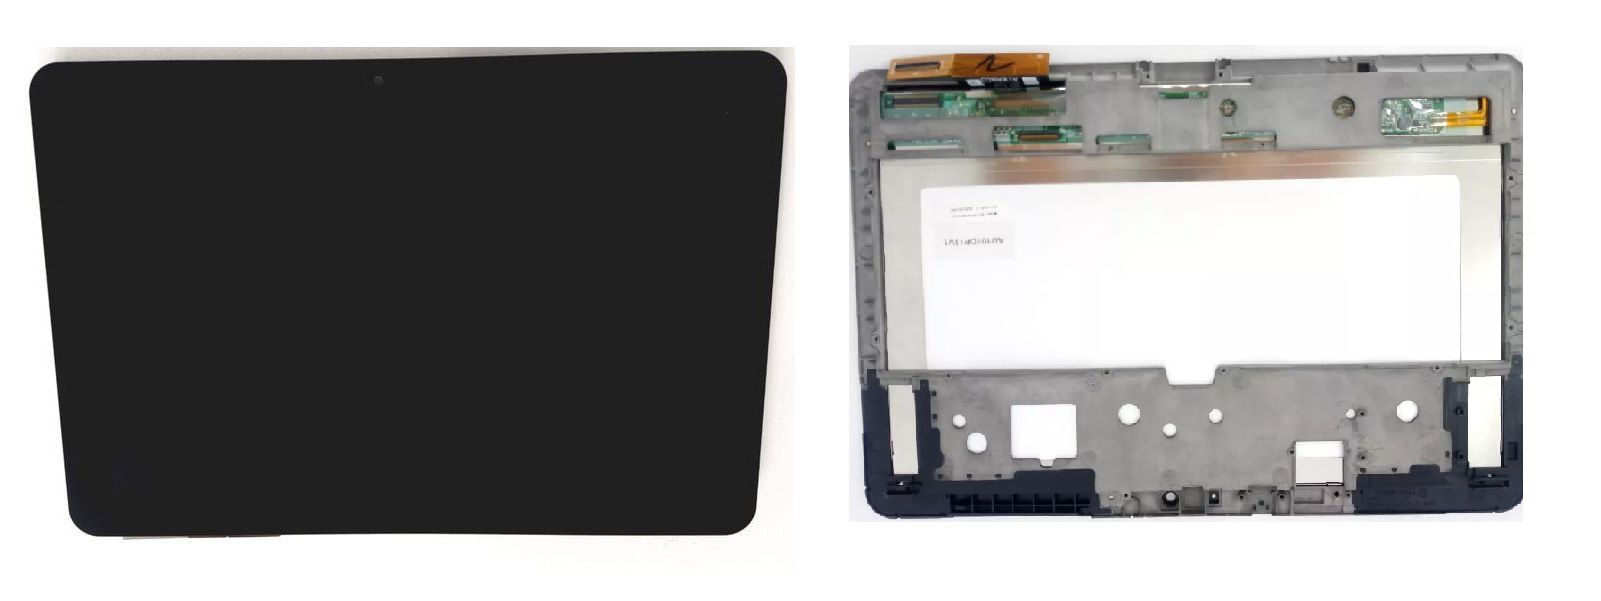 Frontal Lcd Touch Netbook 10.1 Semp Toshiba Au101dp11v1 10.1 STI